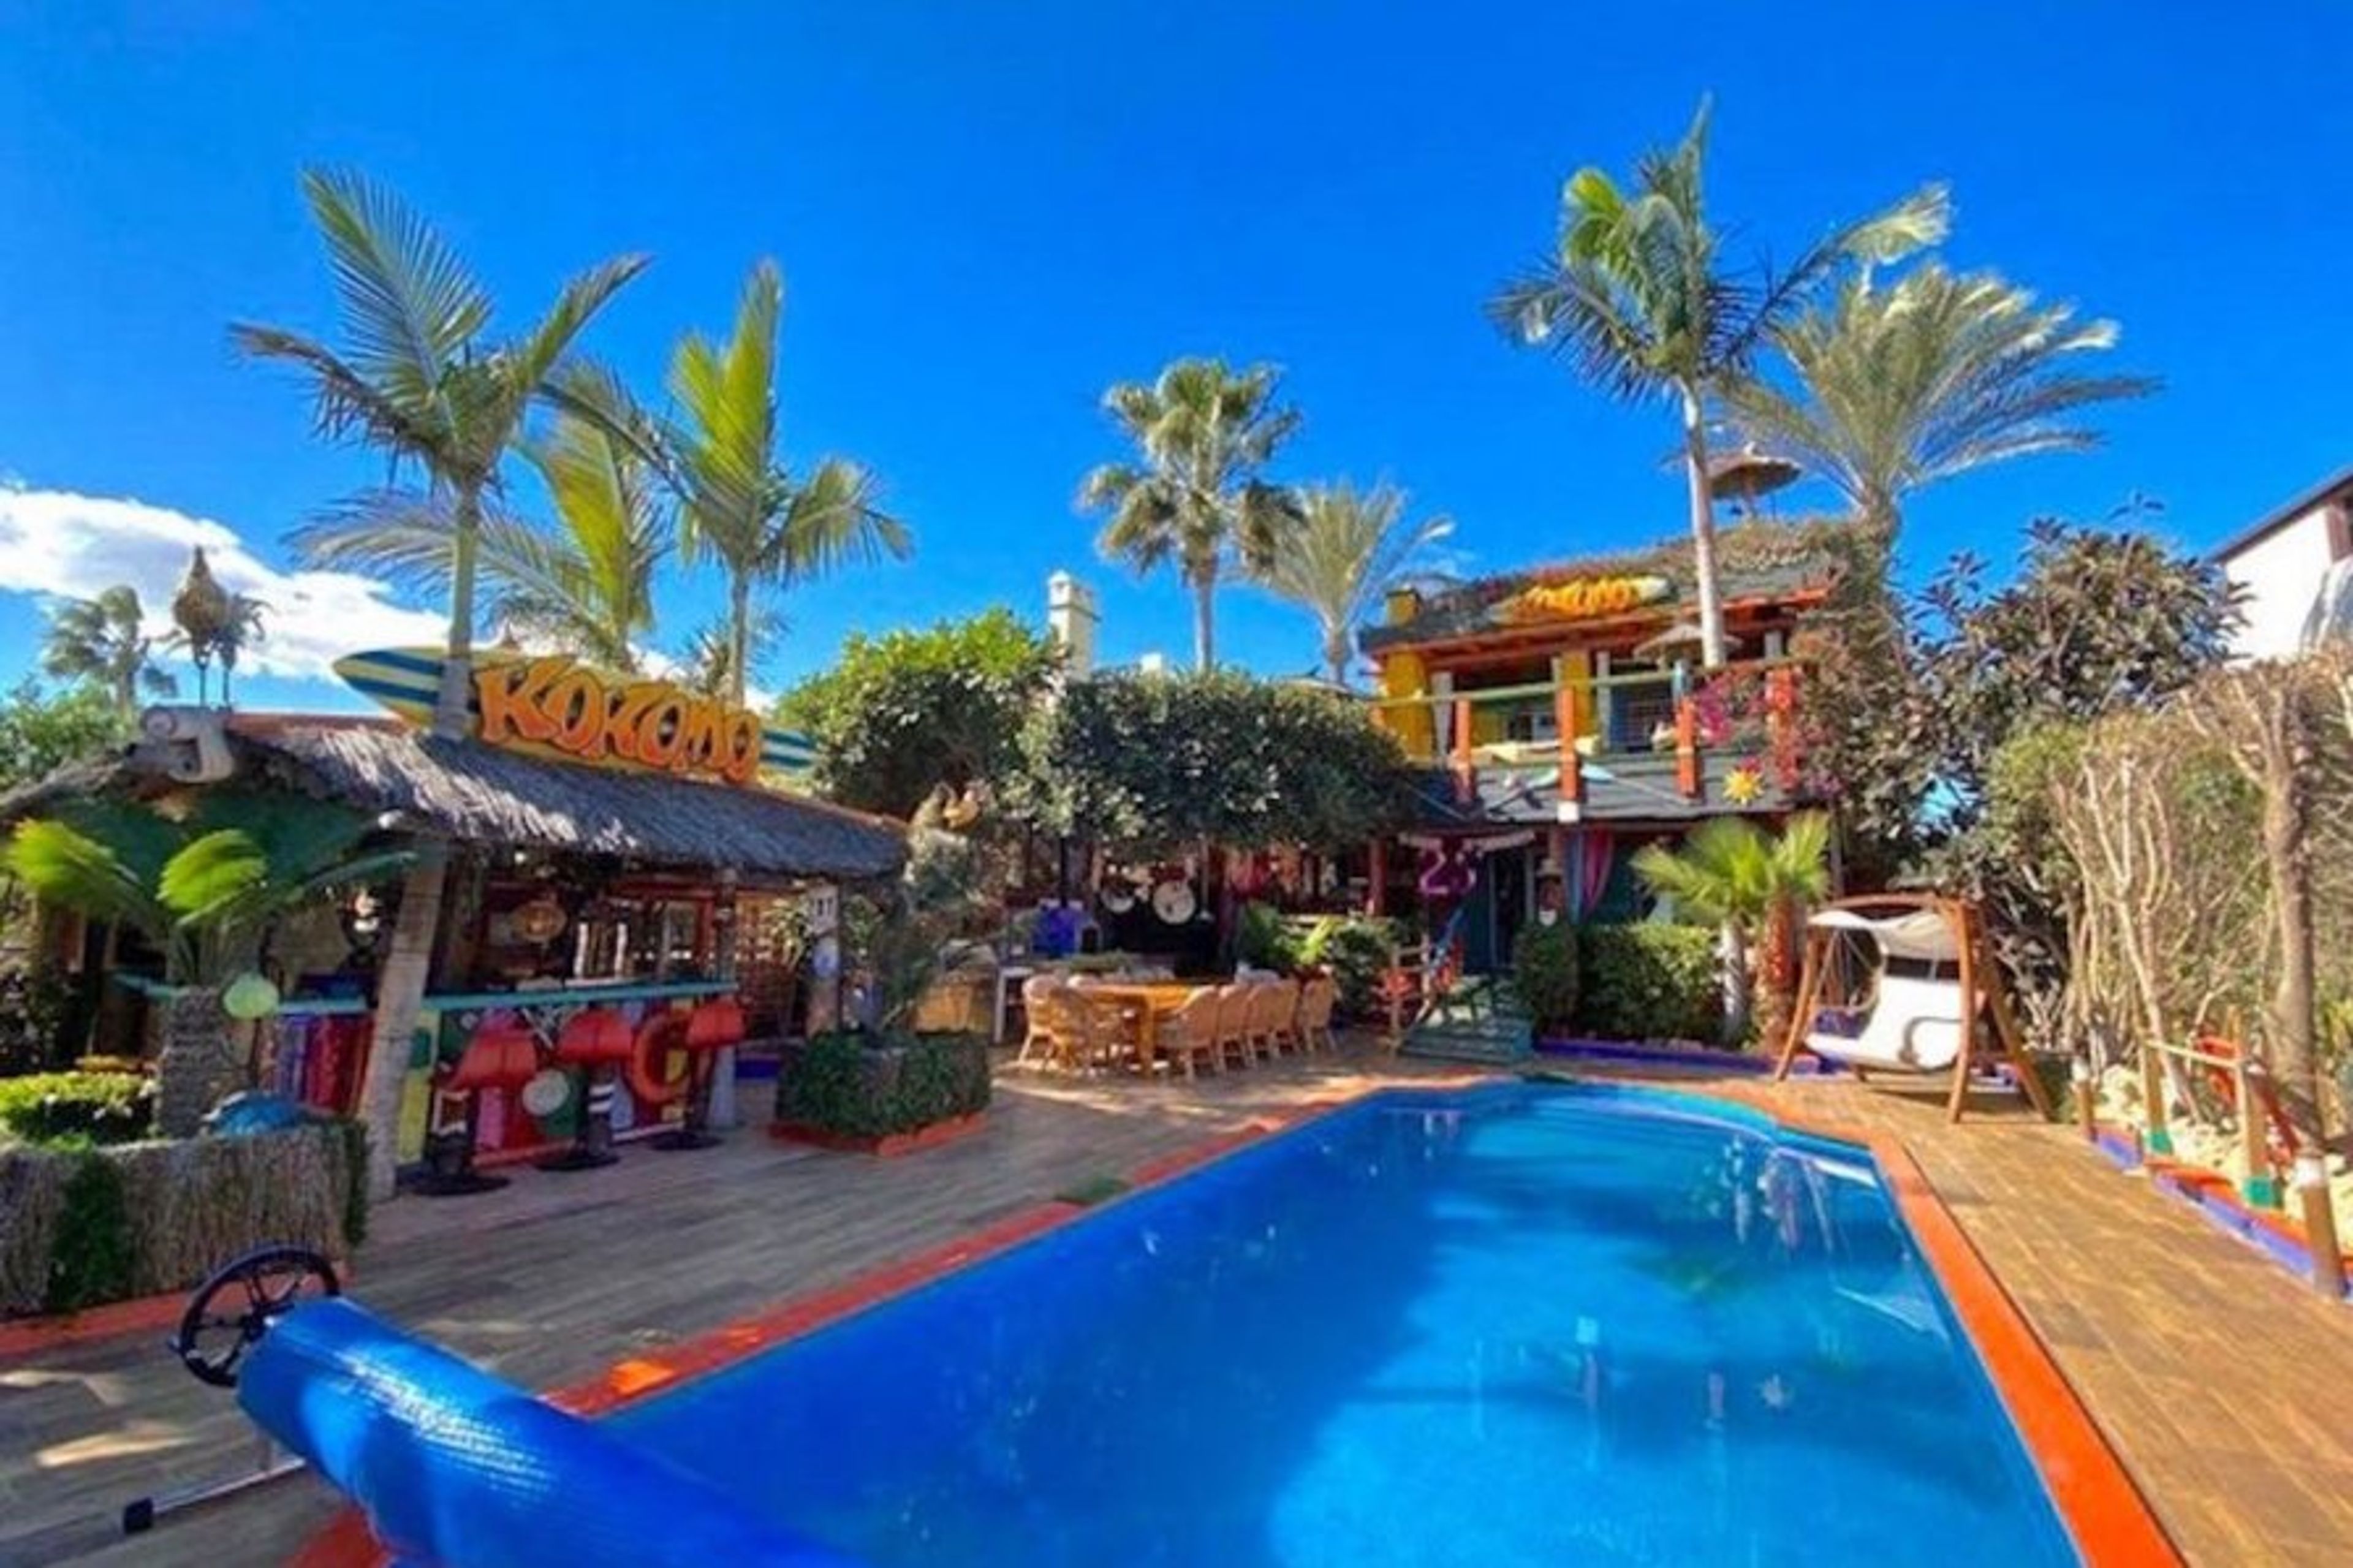 Kokomo Pool terrace, dining area & garden Bar.  